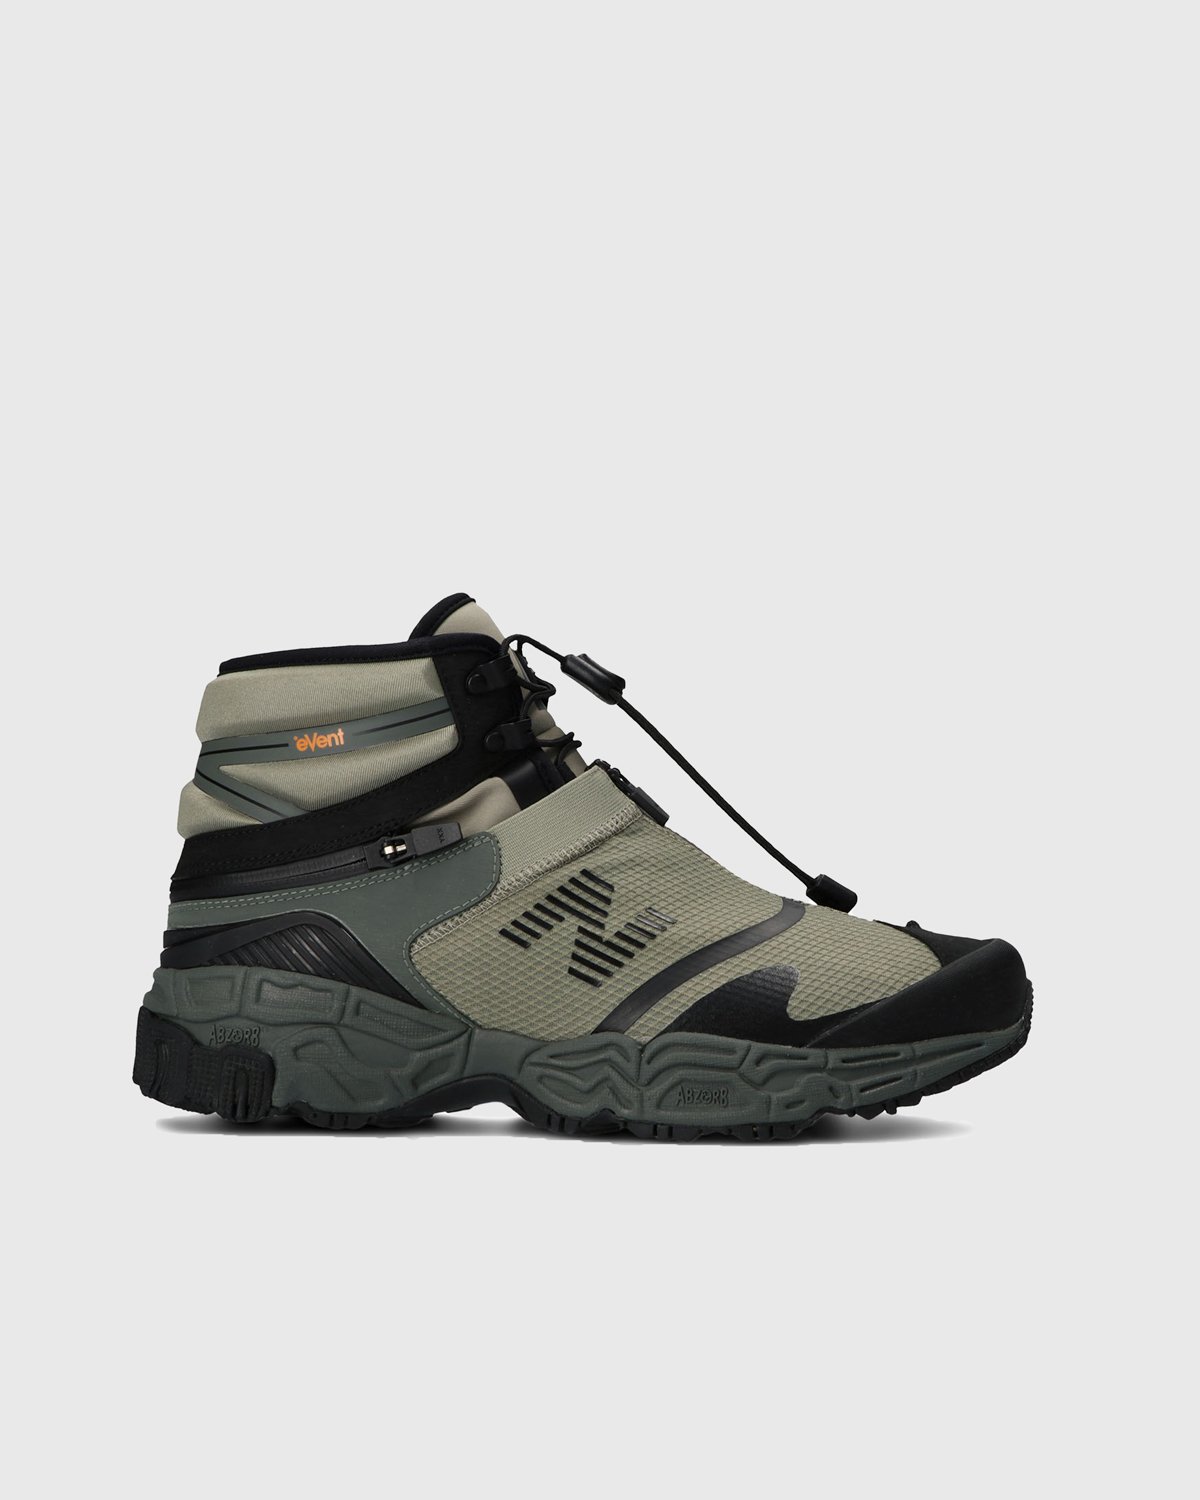 New Balance x Snow Peak - Niobium Beige/Black/Green - Footwear - Green - Image 1